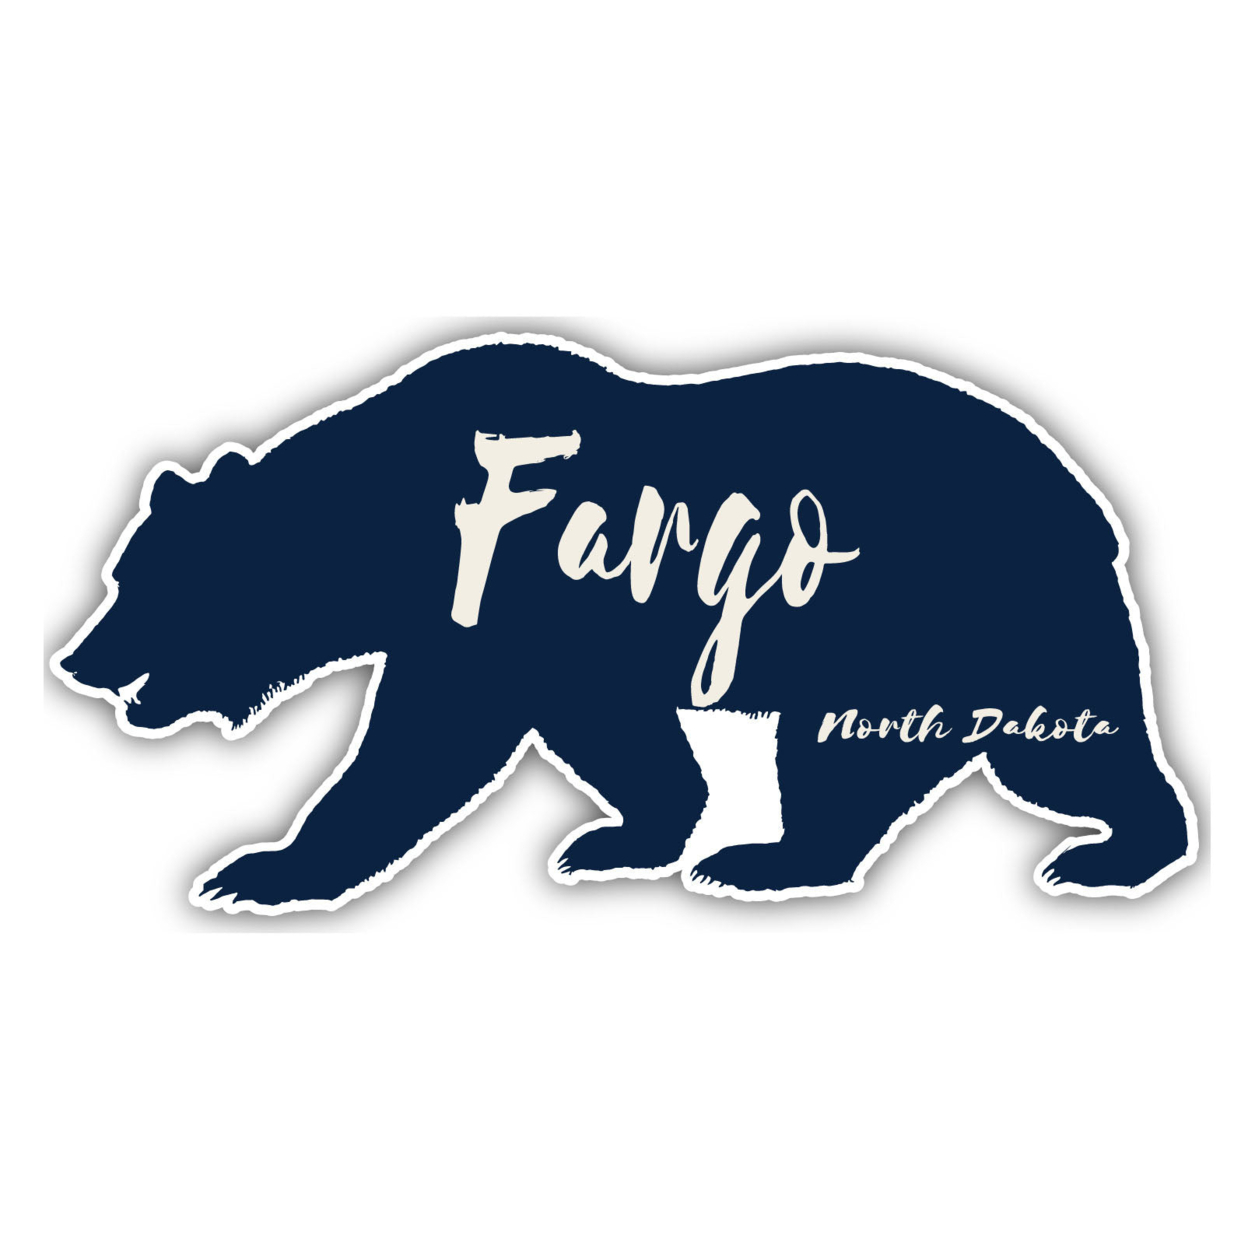 Fargo North Dakota Souvenir Decorative Stickers (Choose Theme And Size) - Single Unit, 4-Inch, Tent